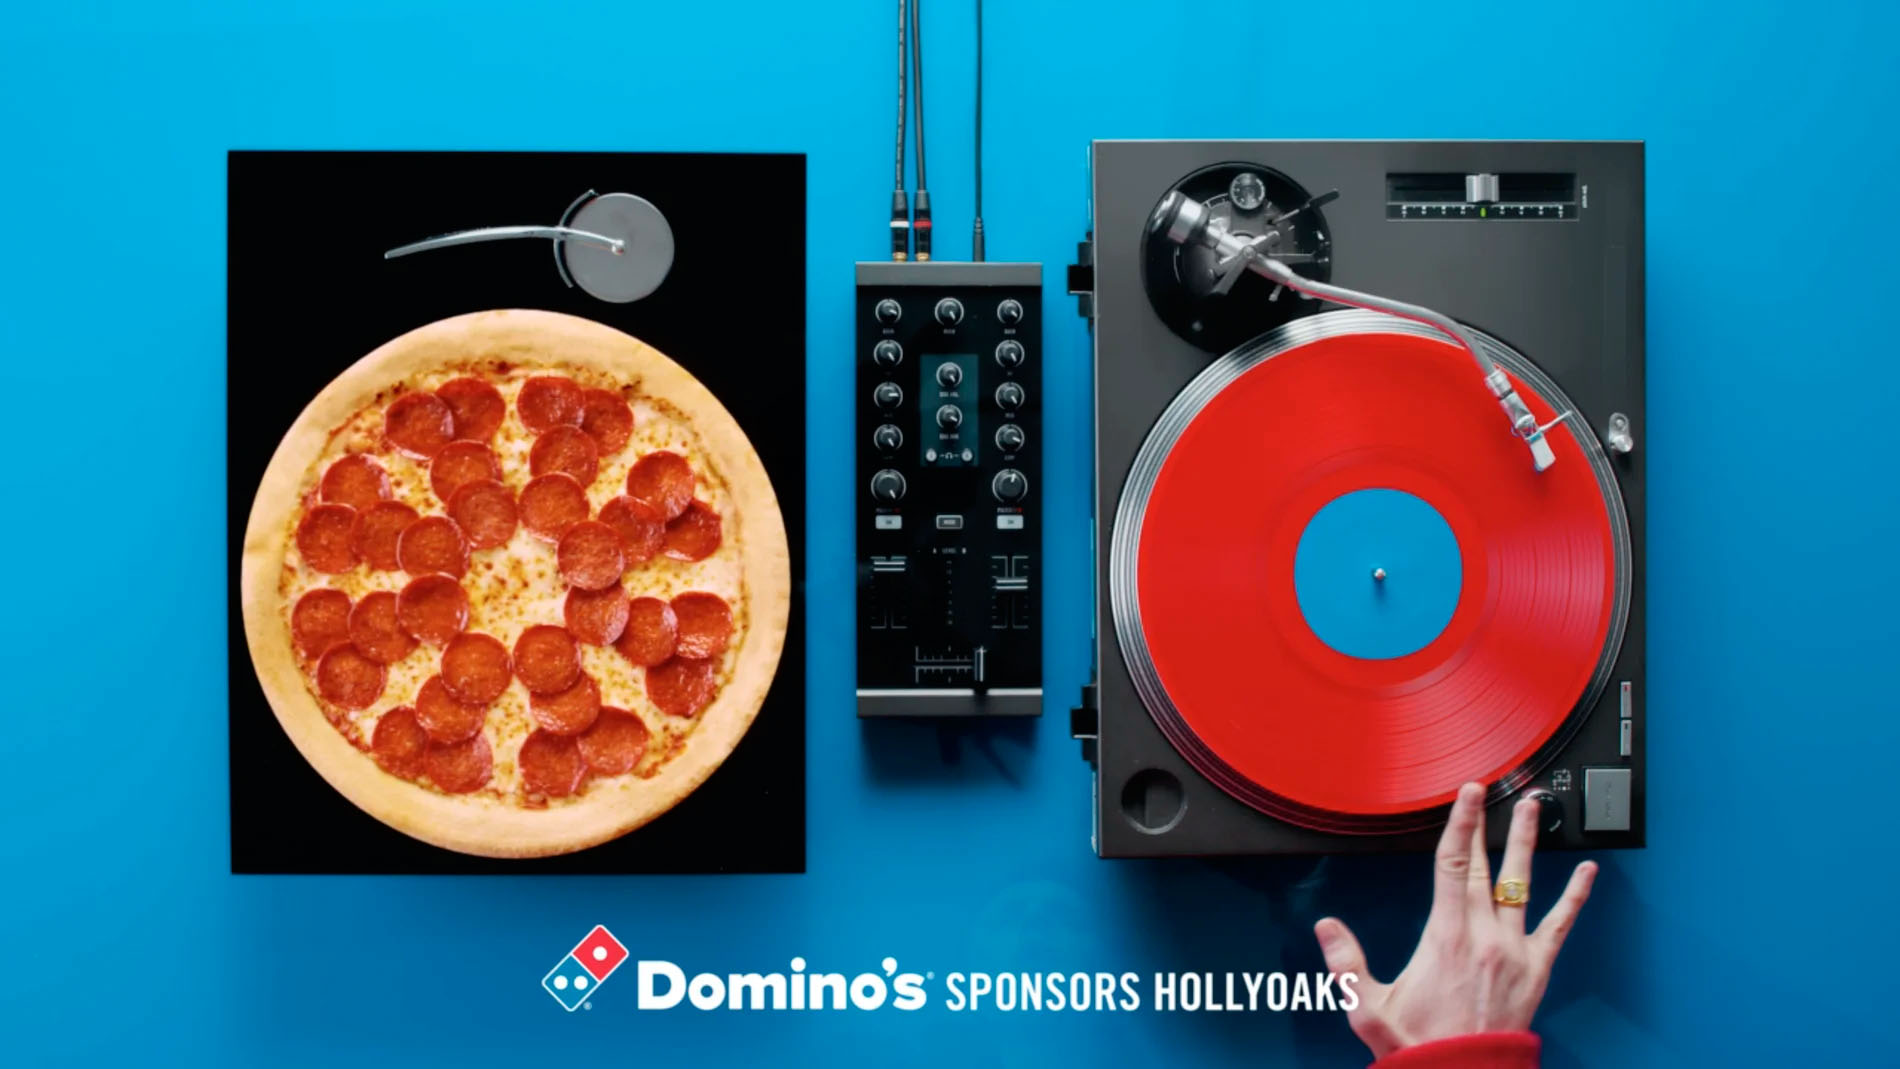 Advertising Food Film of Domino's Sponsors Hollyoaks